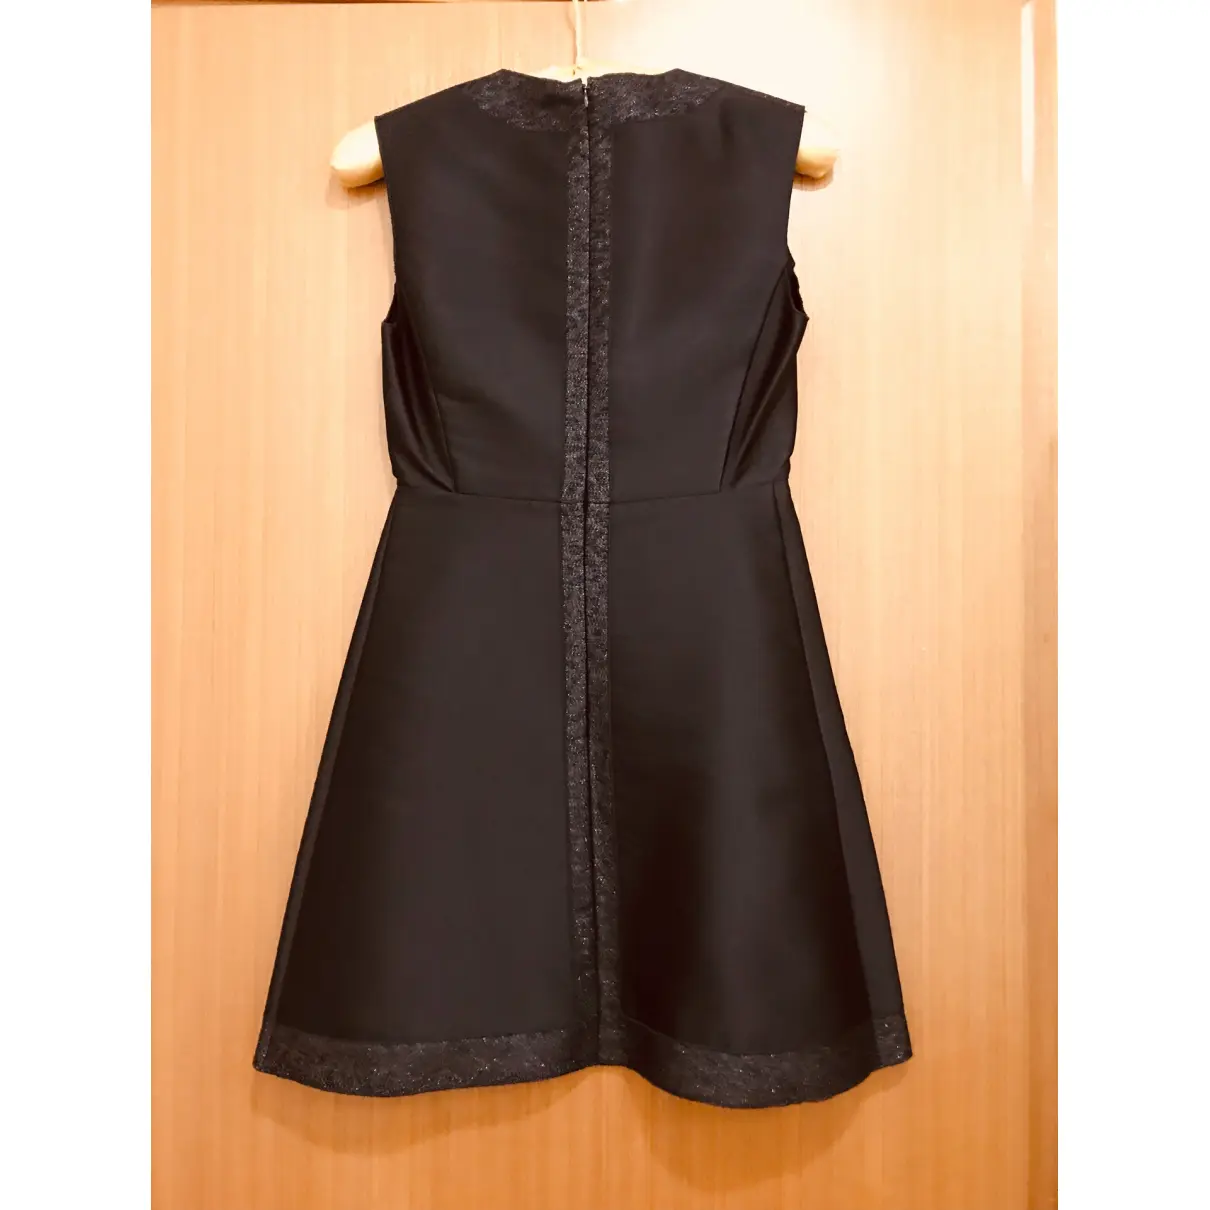 Buy Longchamp Dress online